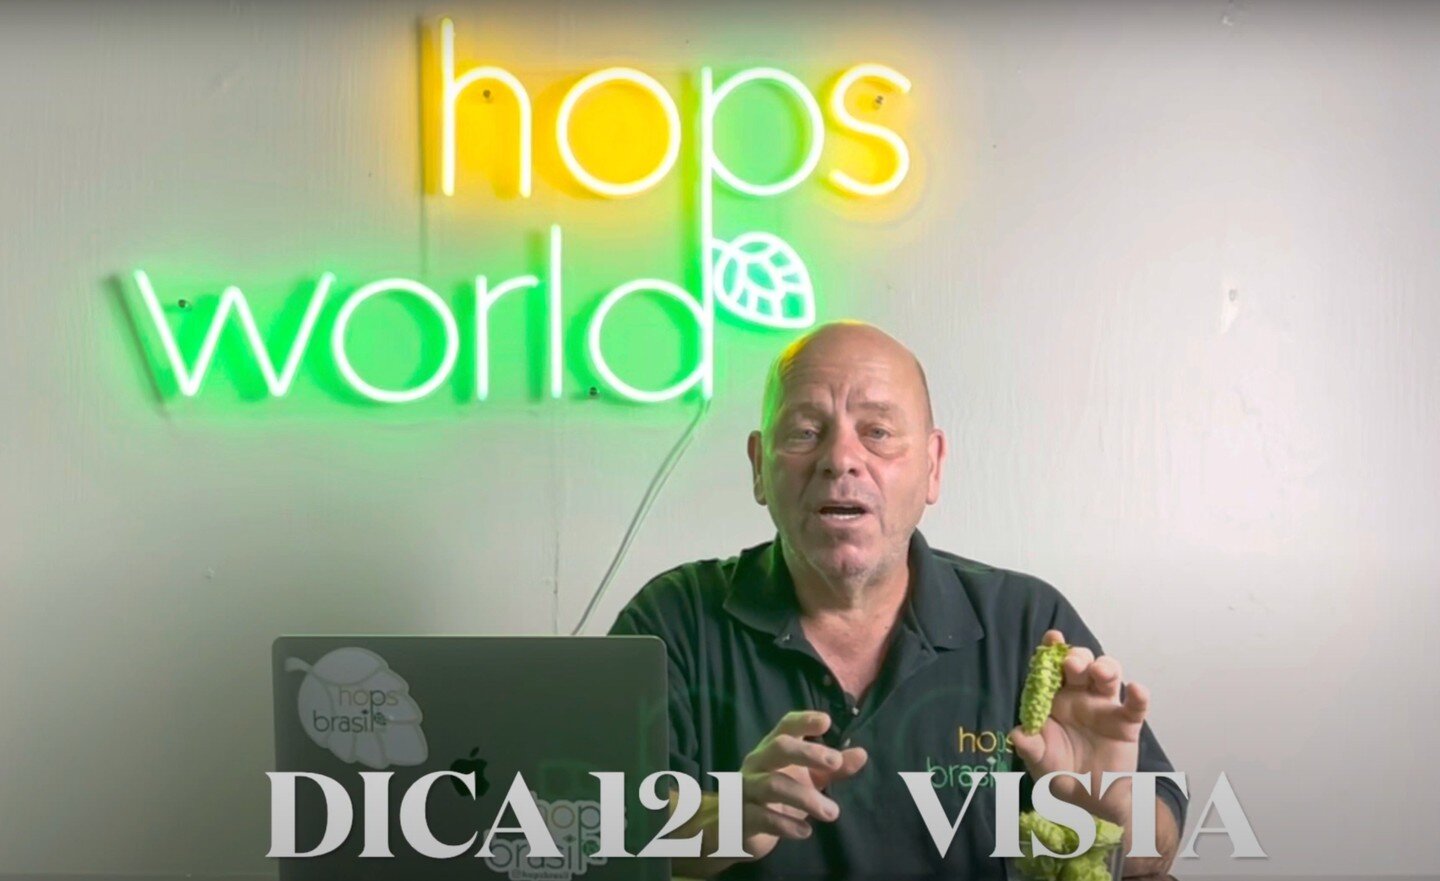 Vista is in Brazil! 
Check the link in our bio for the video from @hopsbrasil! 

#VistaHops #brazilianhops #hopsbrasil 
#Drinkmorehops #PublicHops